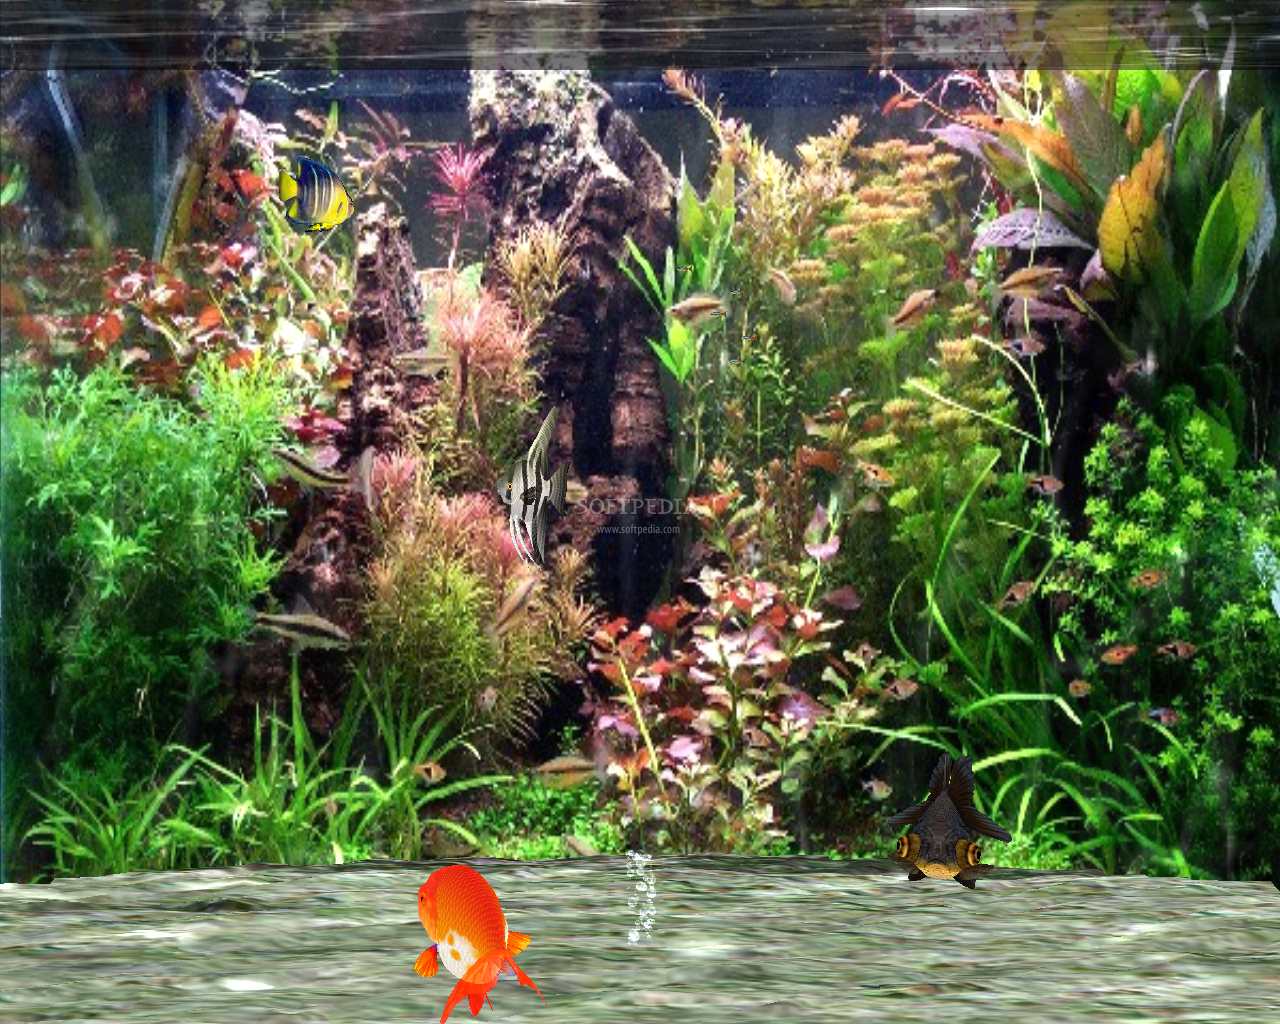 Fantastic-3D-Fish-Aquarium_1 - مجموعه ای زیبا از ماهی های آکواریومی - متا